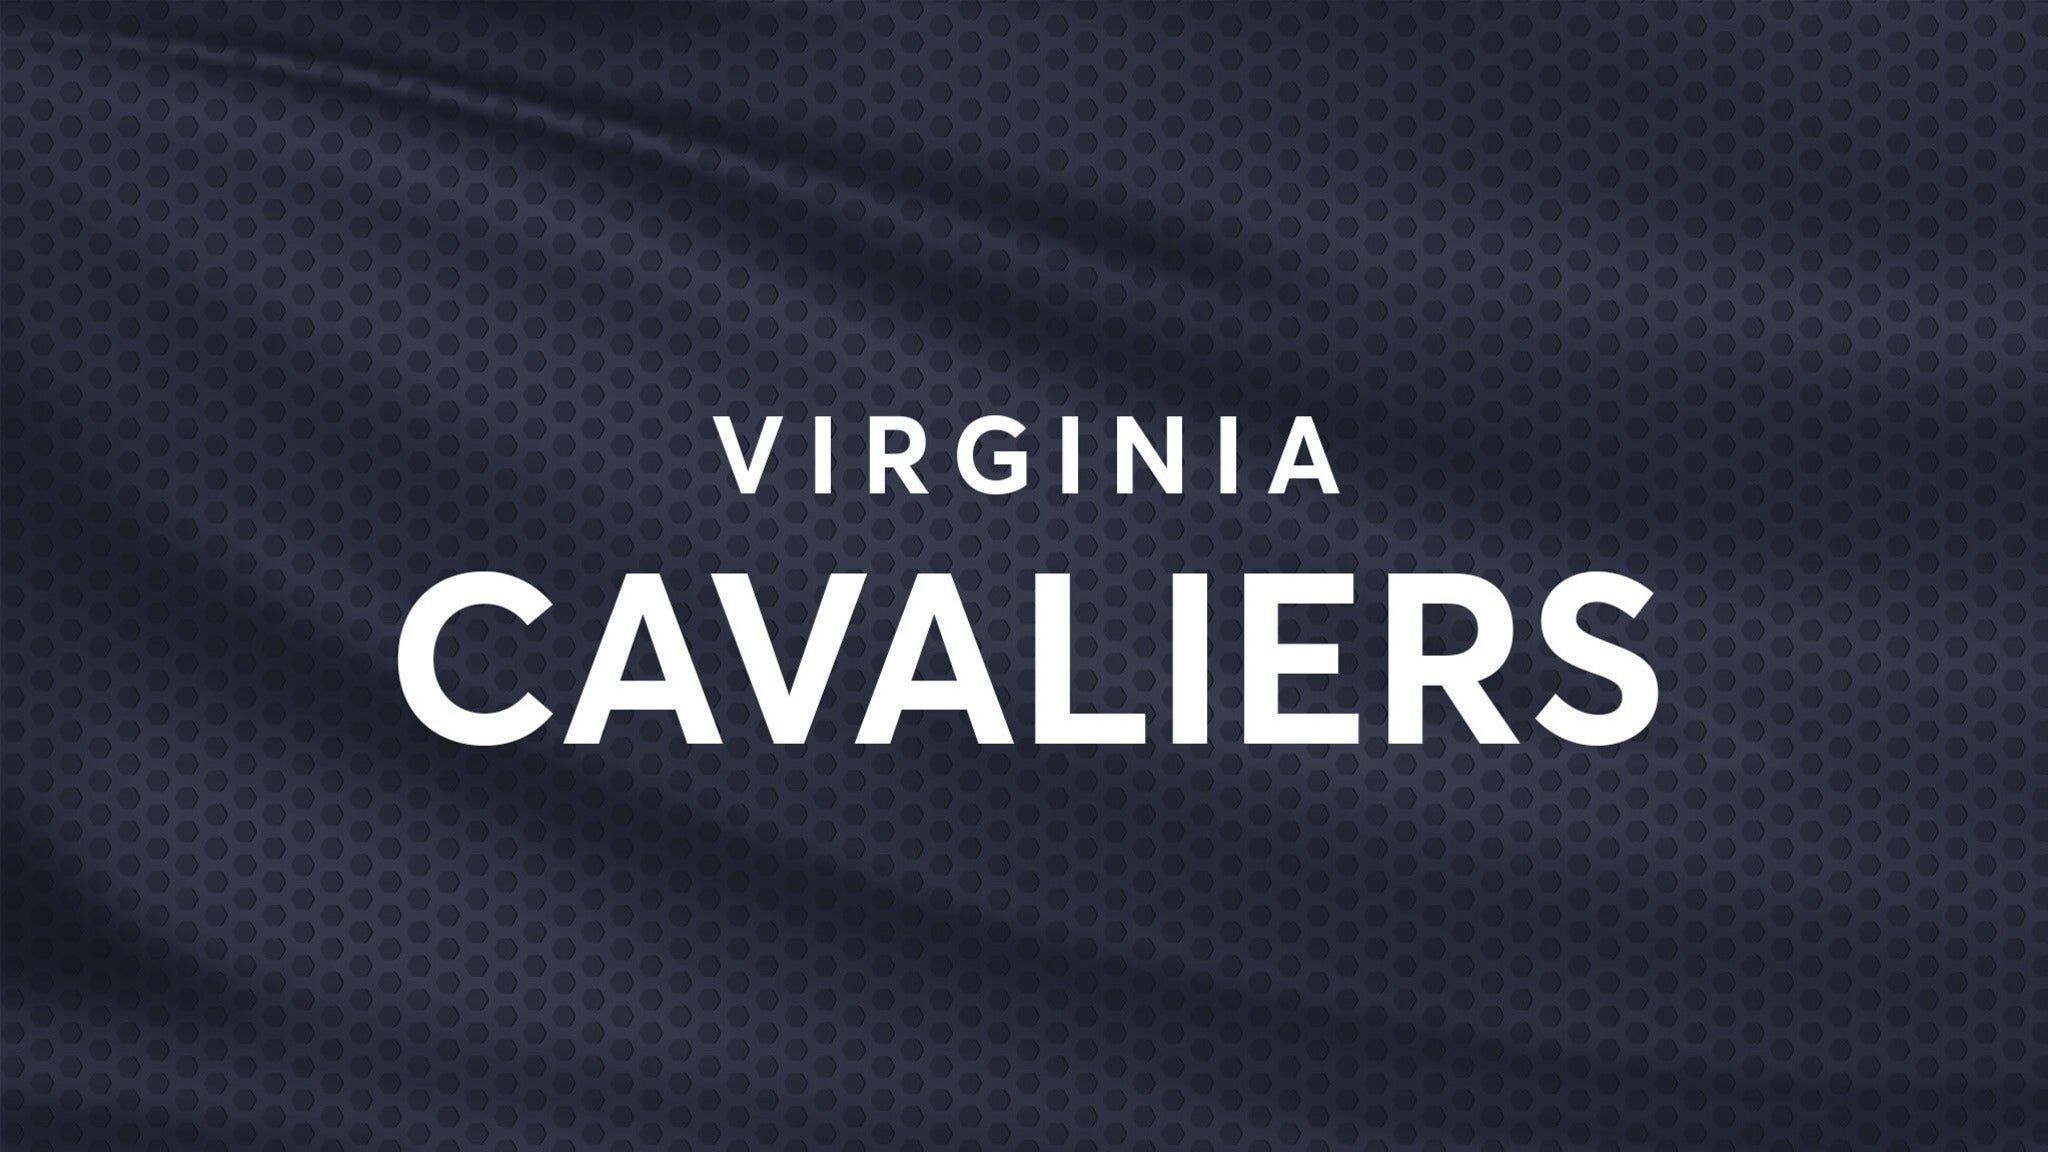 Virginia Cavaliers Football vs. Coastal Carolina Chanticleers Football